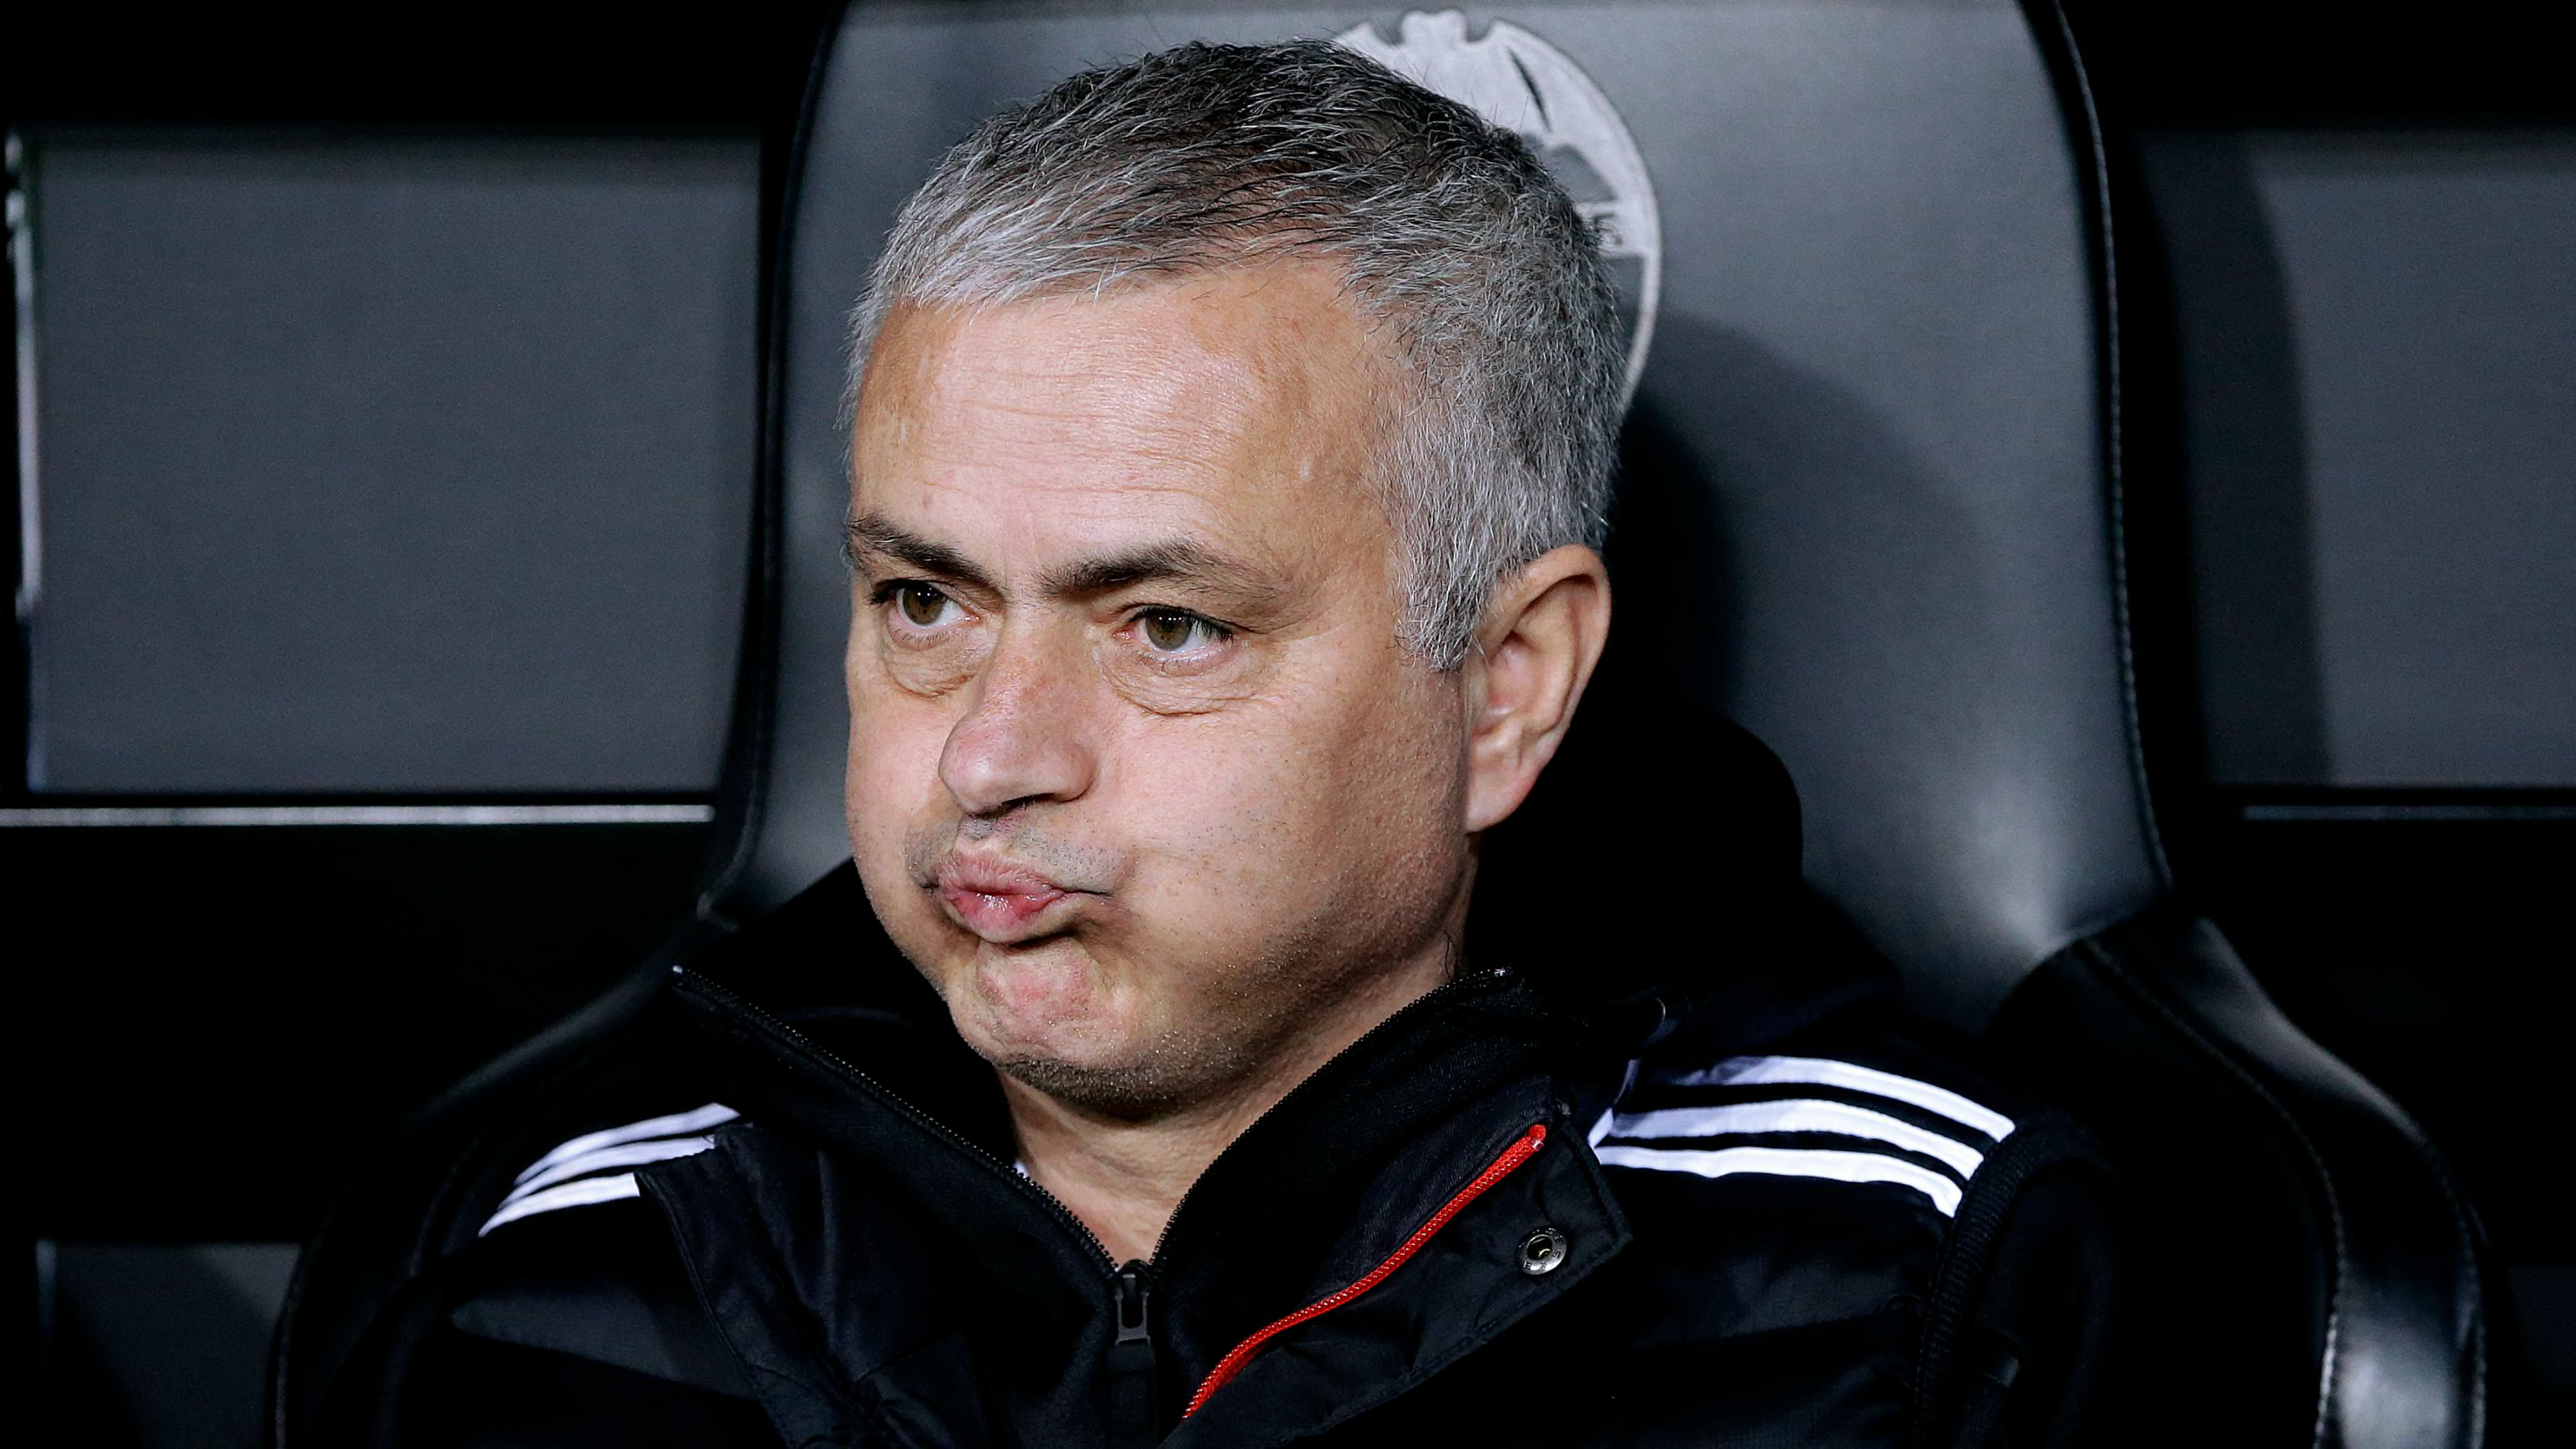 Jose Mourinho wants sensational Man Utd return - report